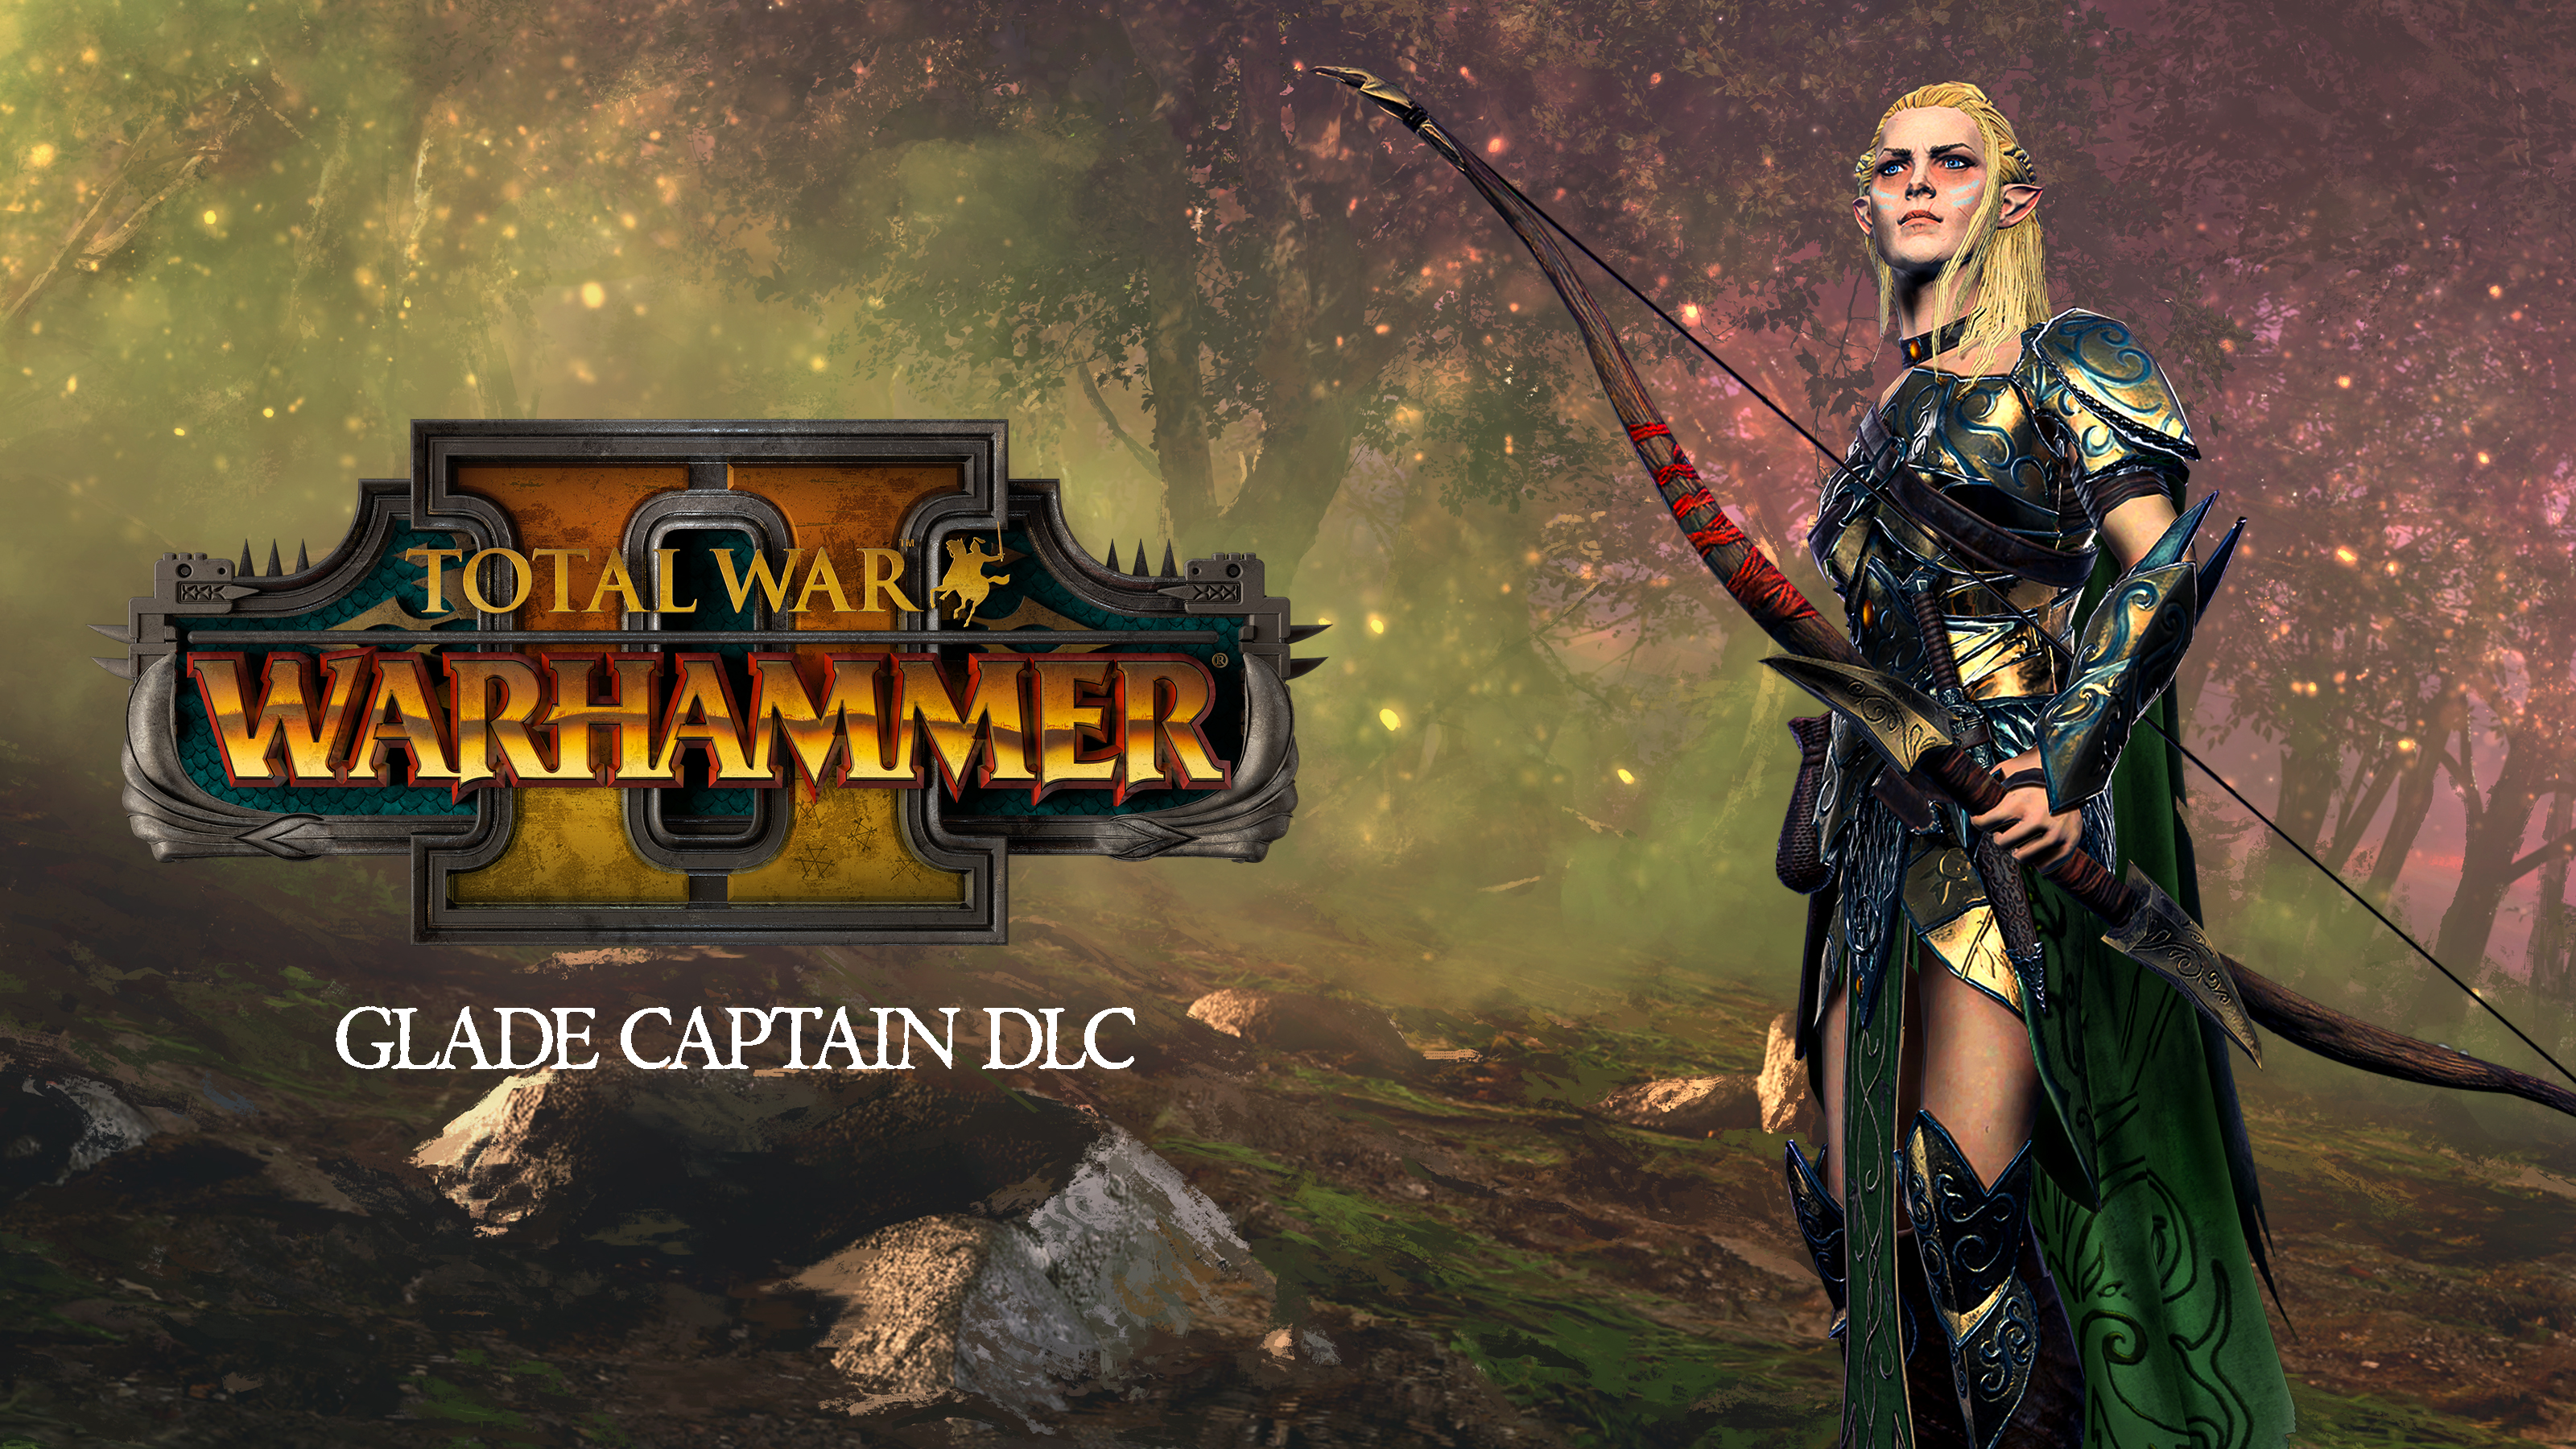 [$ 0.21] Total War: WARHAMMER II - Glade Captain DLC Epic Games CD Key